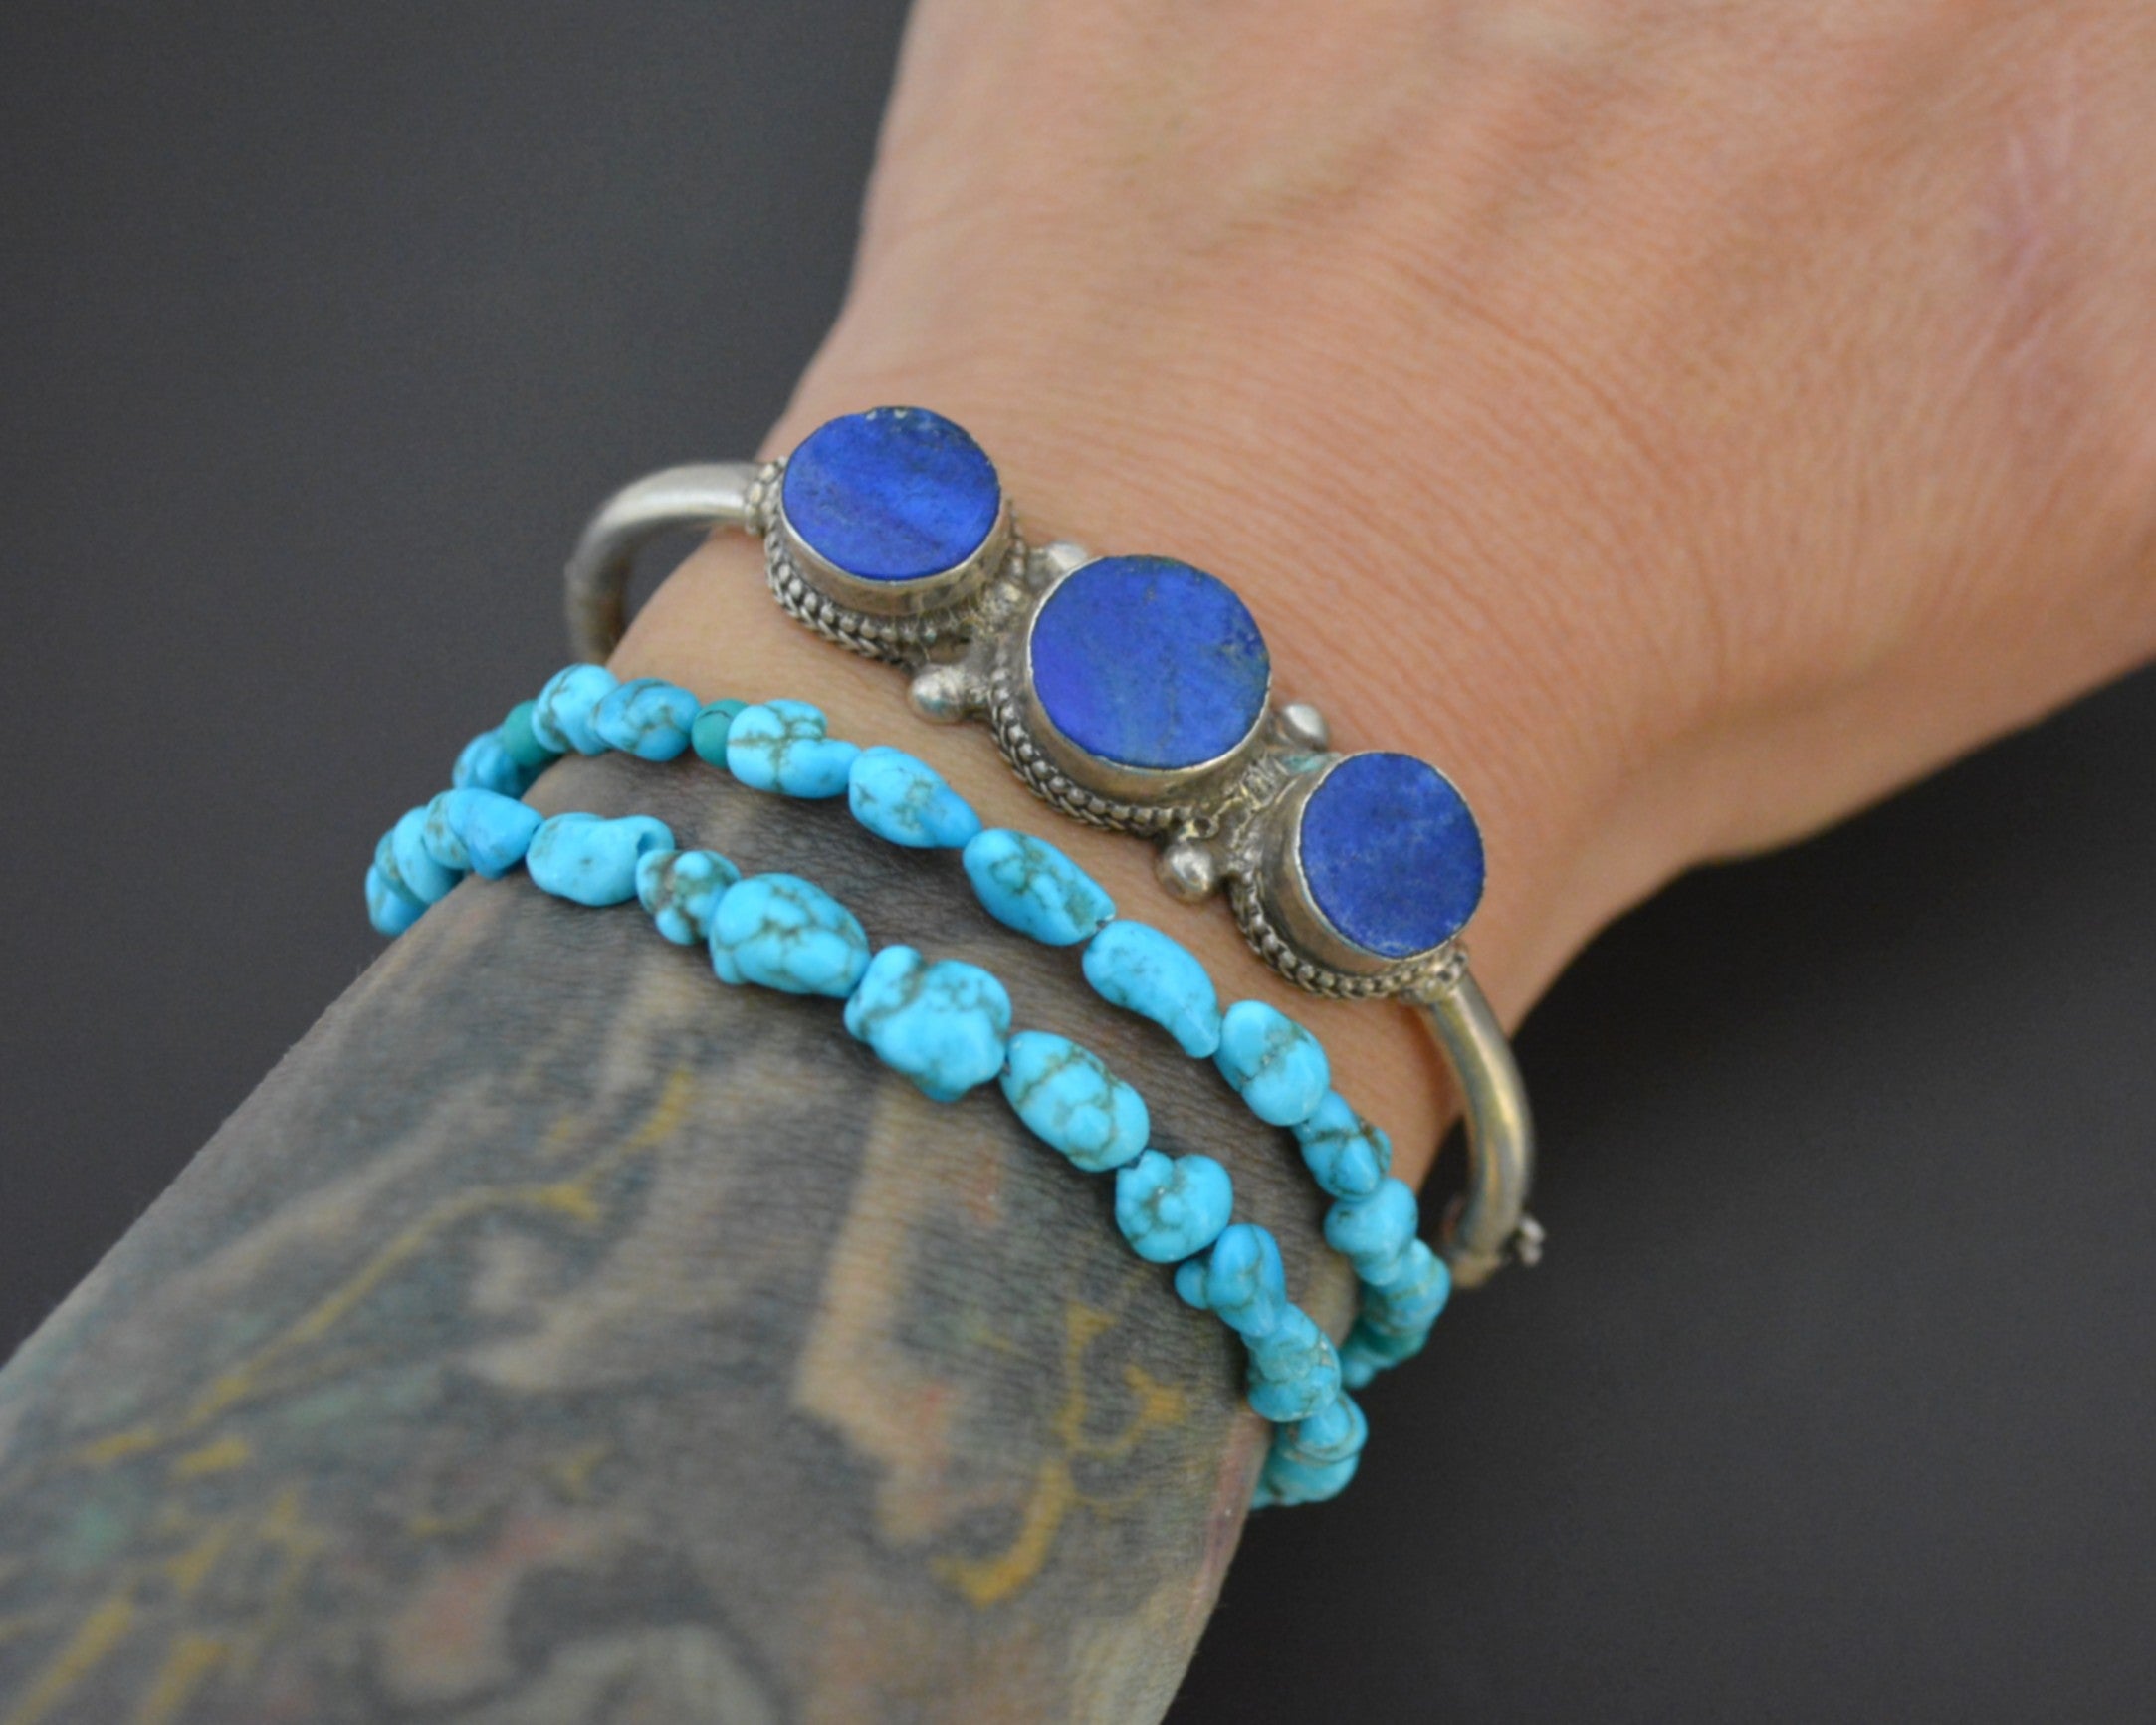 Vintage Lapis Lazuli Bracelet from India - SMALL - Hinged